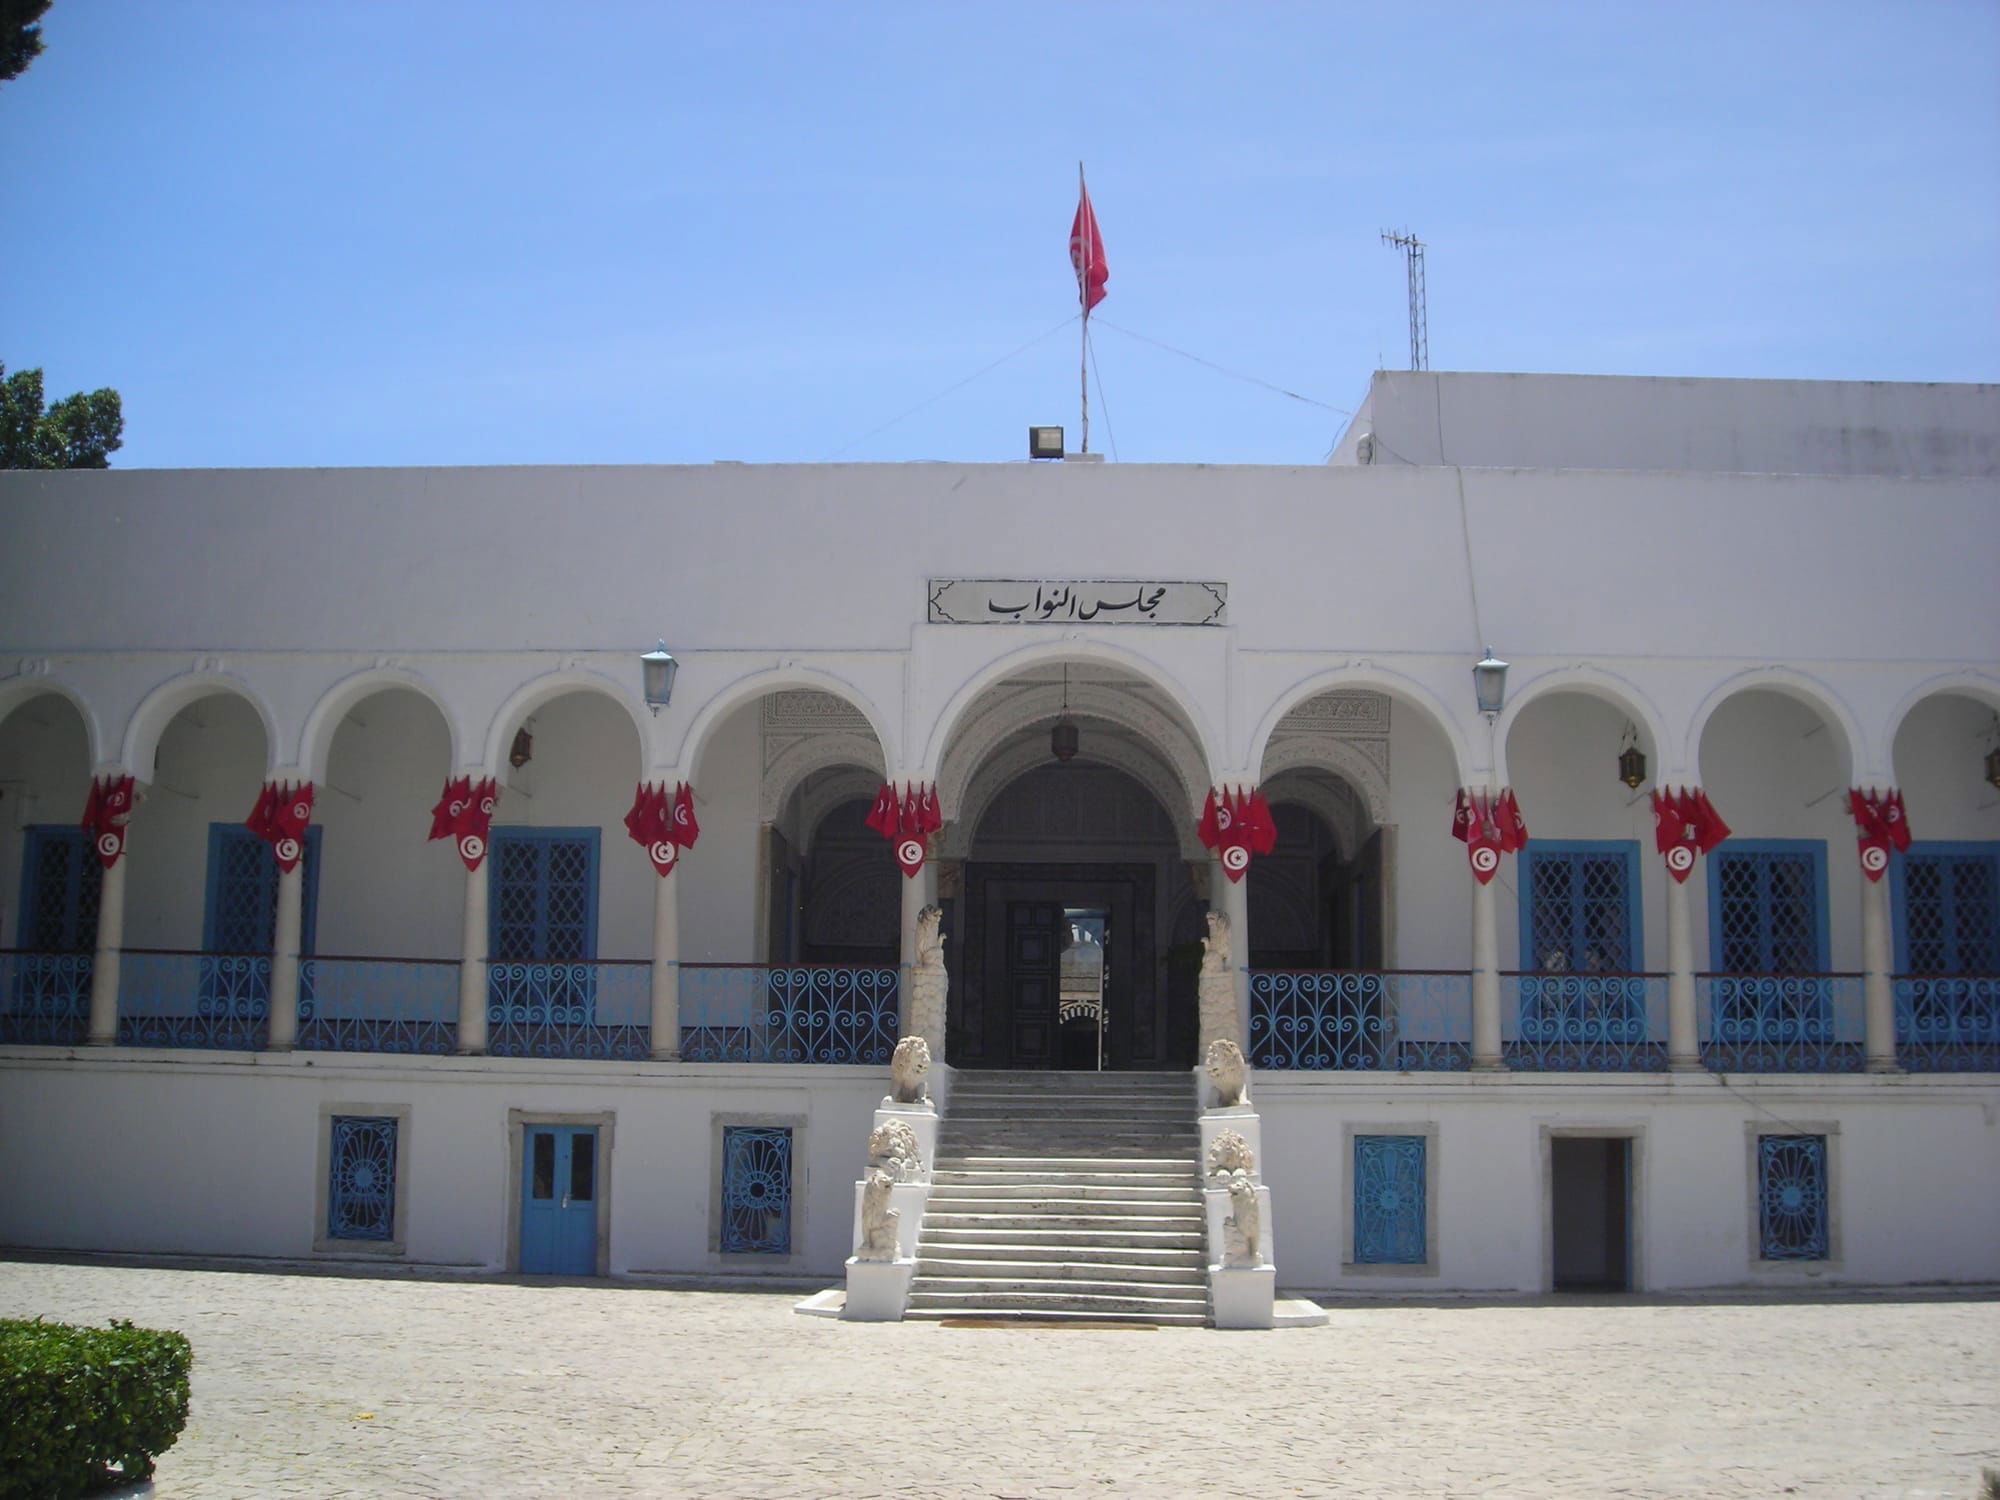 Tunisia's Ailing Democracy